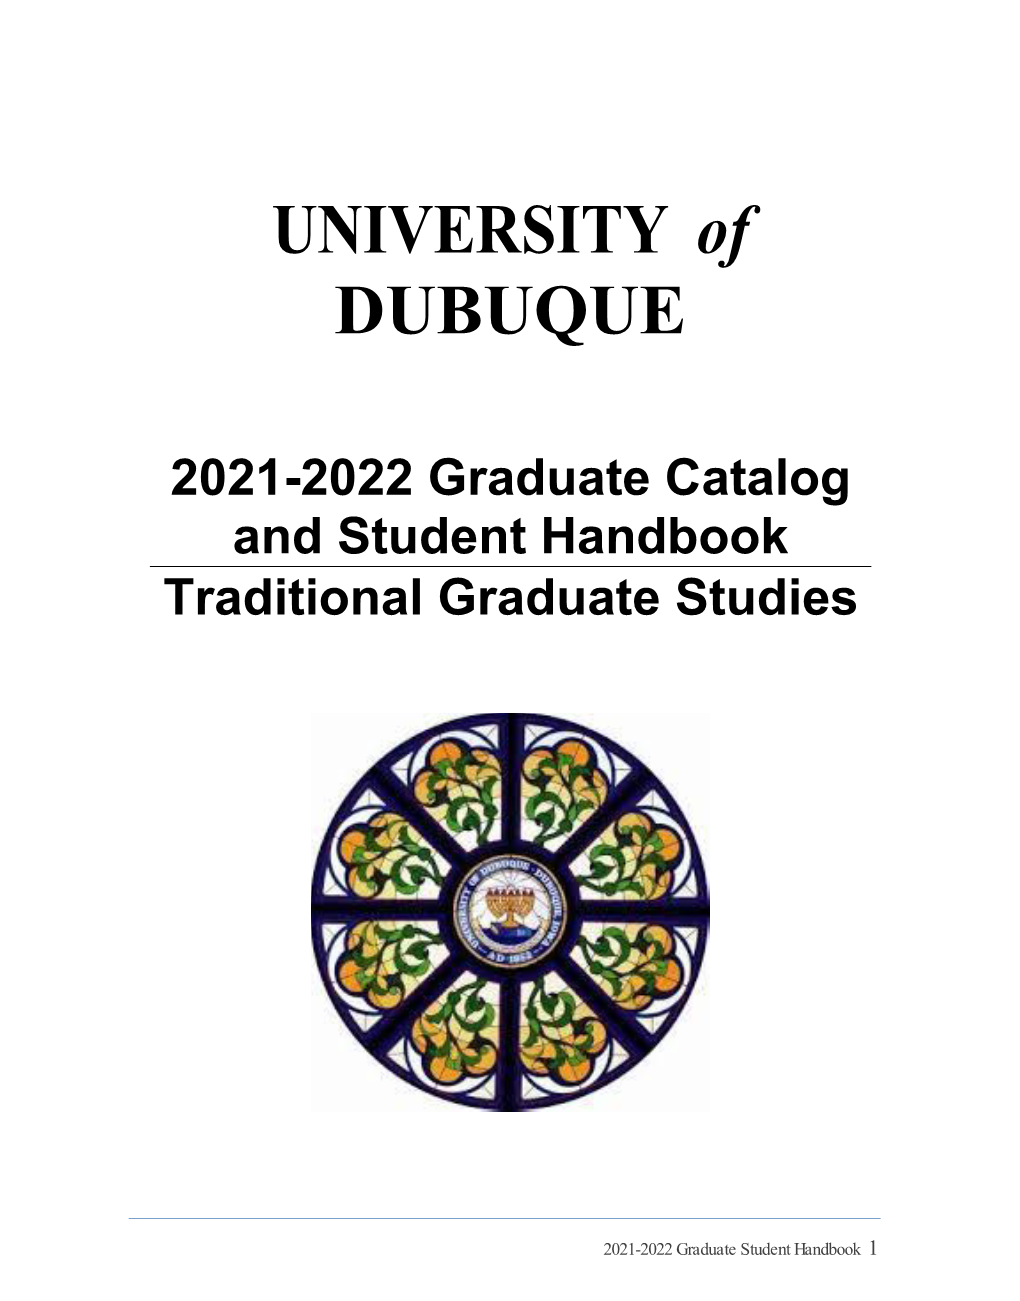 Graduate Catalog 2021-2022